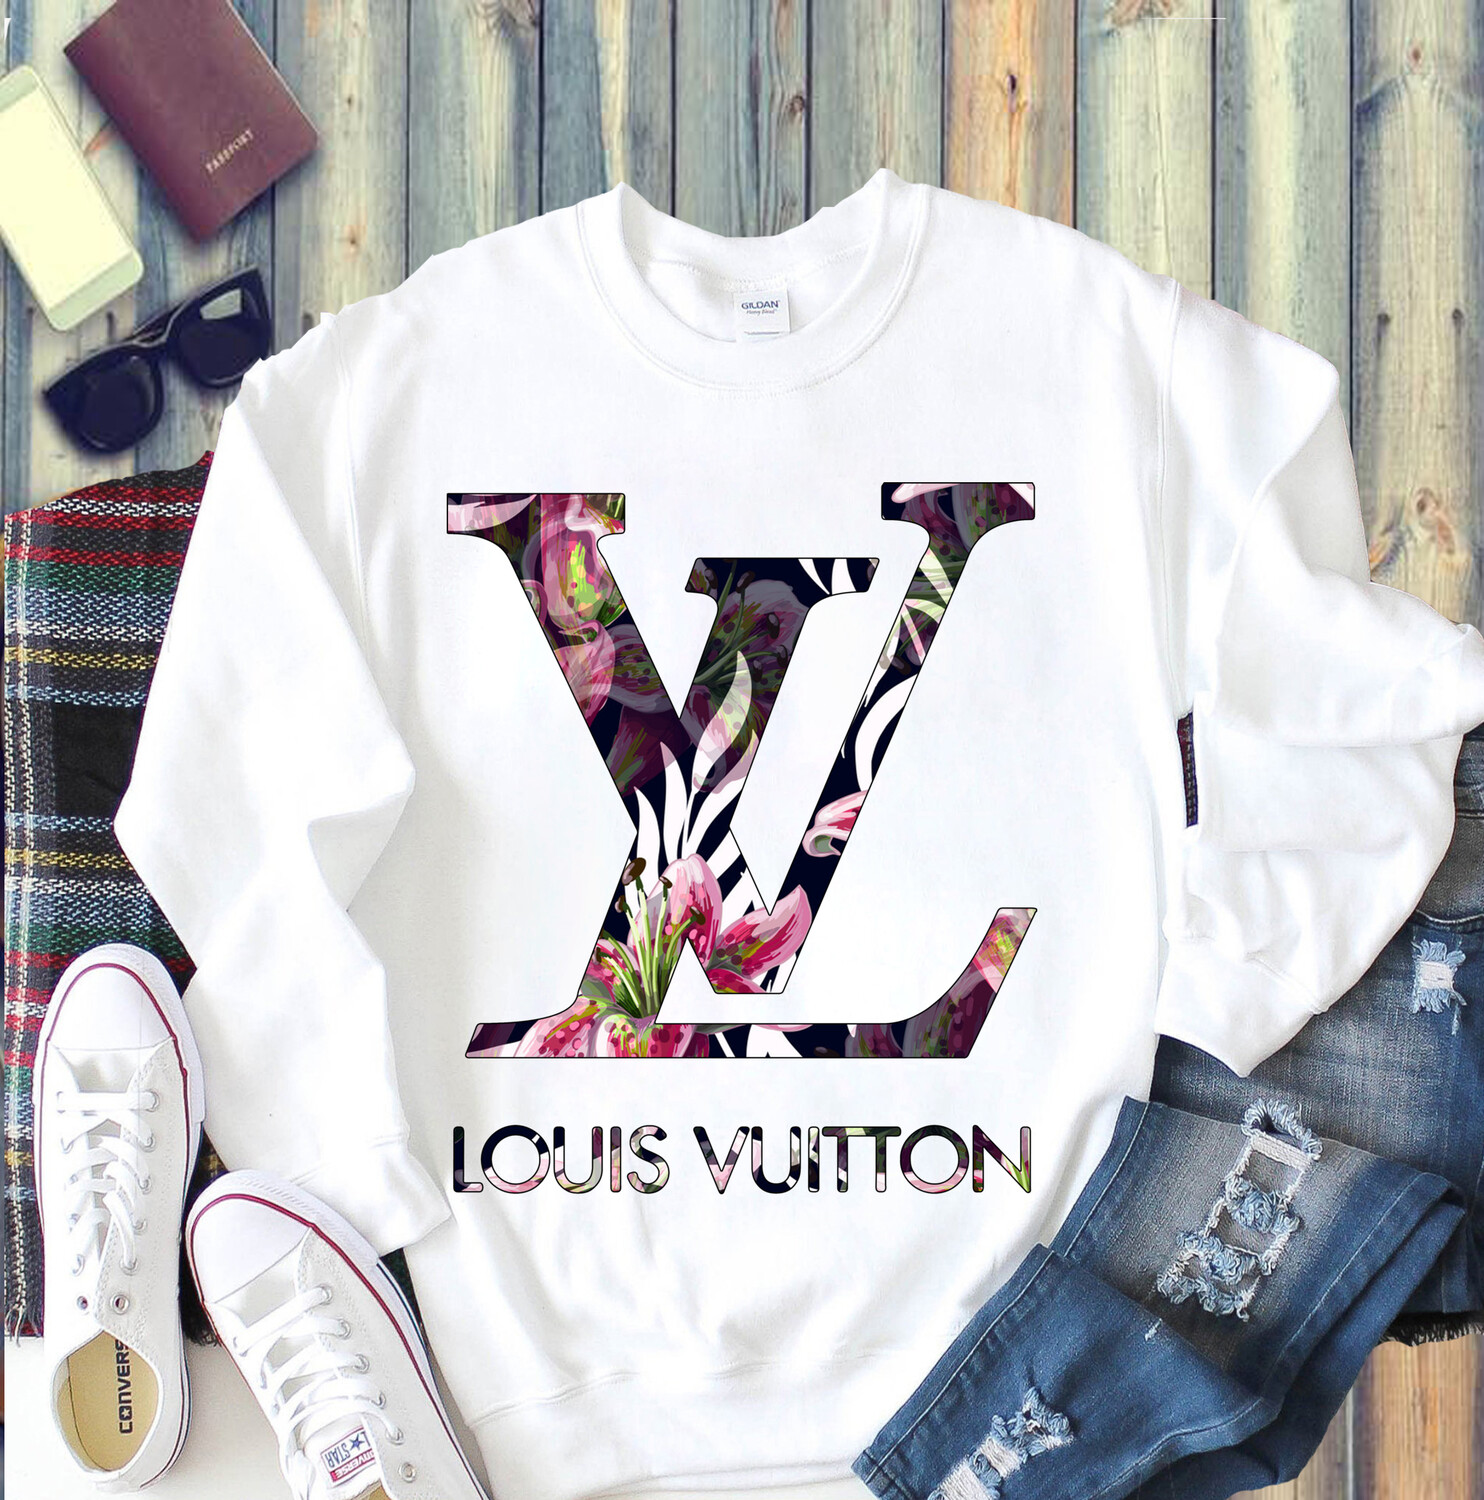 hand lv logo sweatshirt